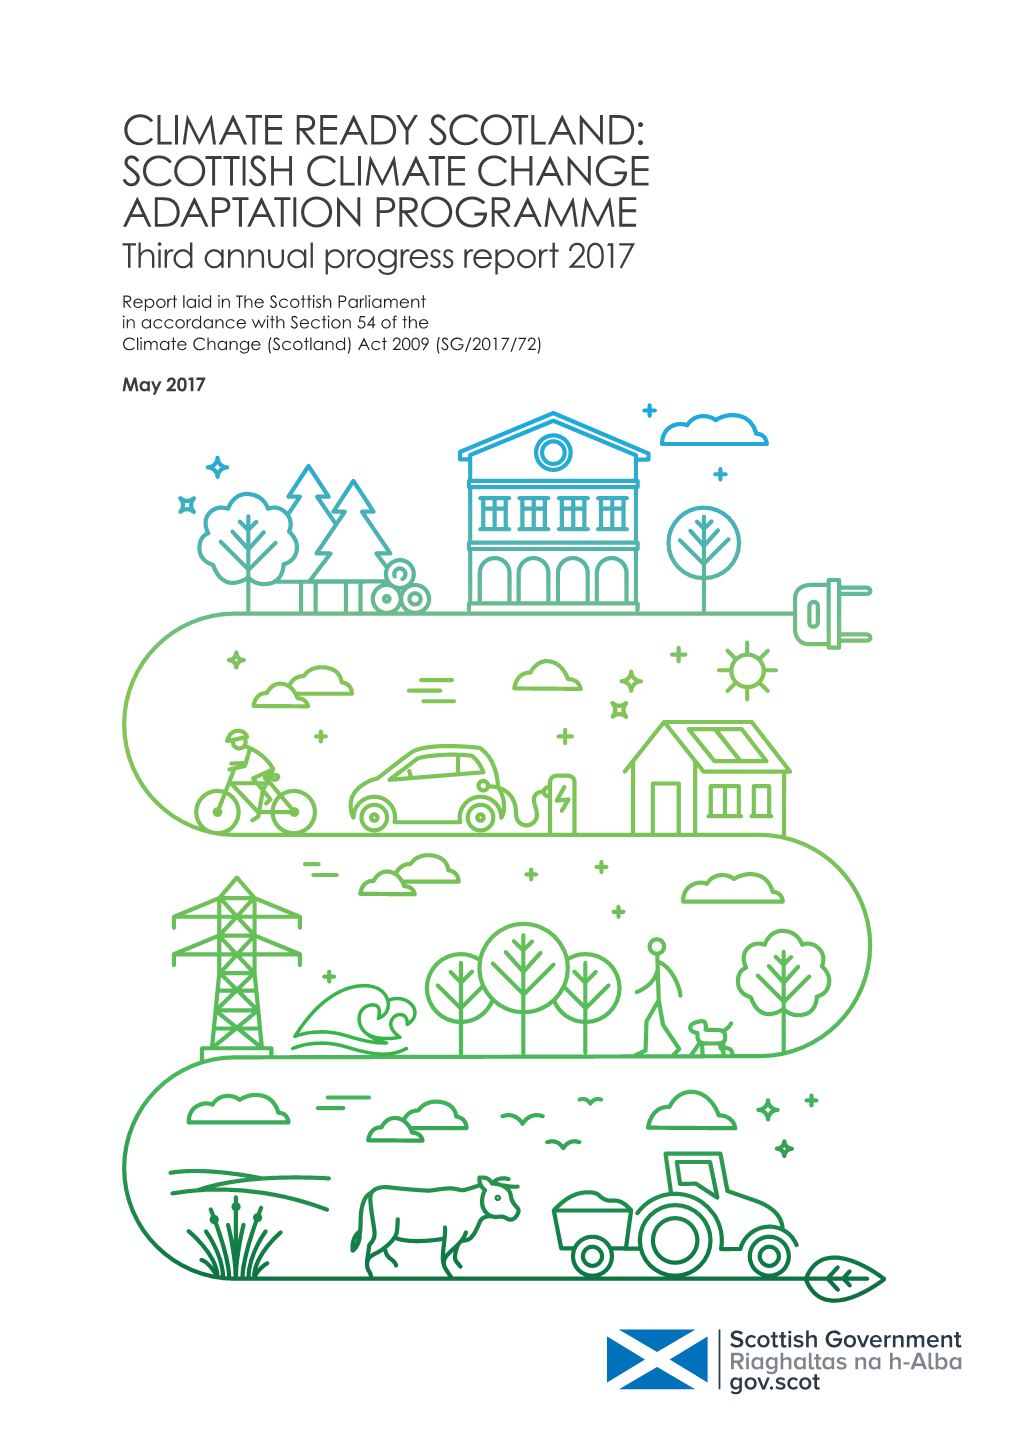 CLIMATE READY SCOTLAND: SCOTTISH CLIMATE CHANGE ADAPTATION PROGRAMME Third Annual Progress Report 2017